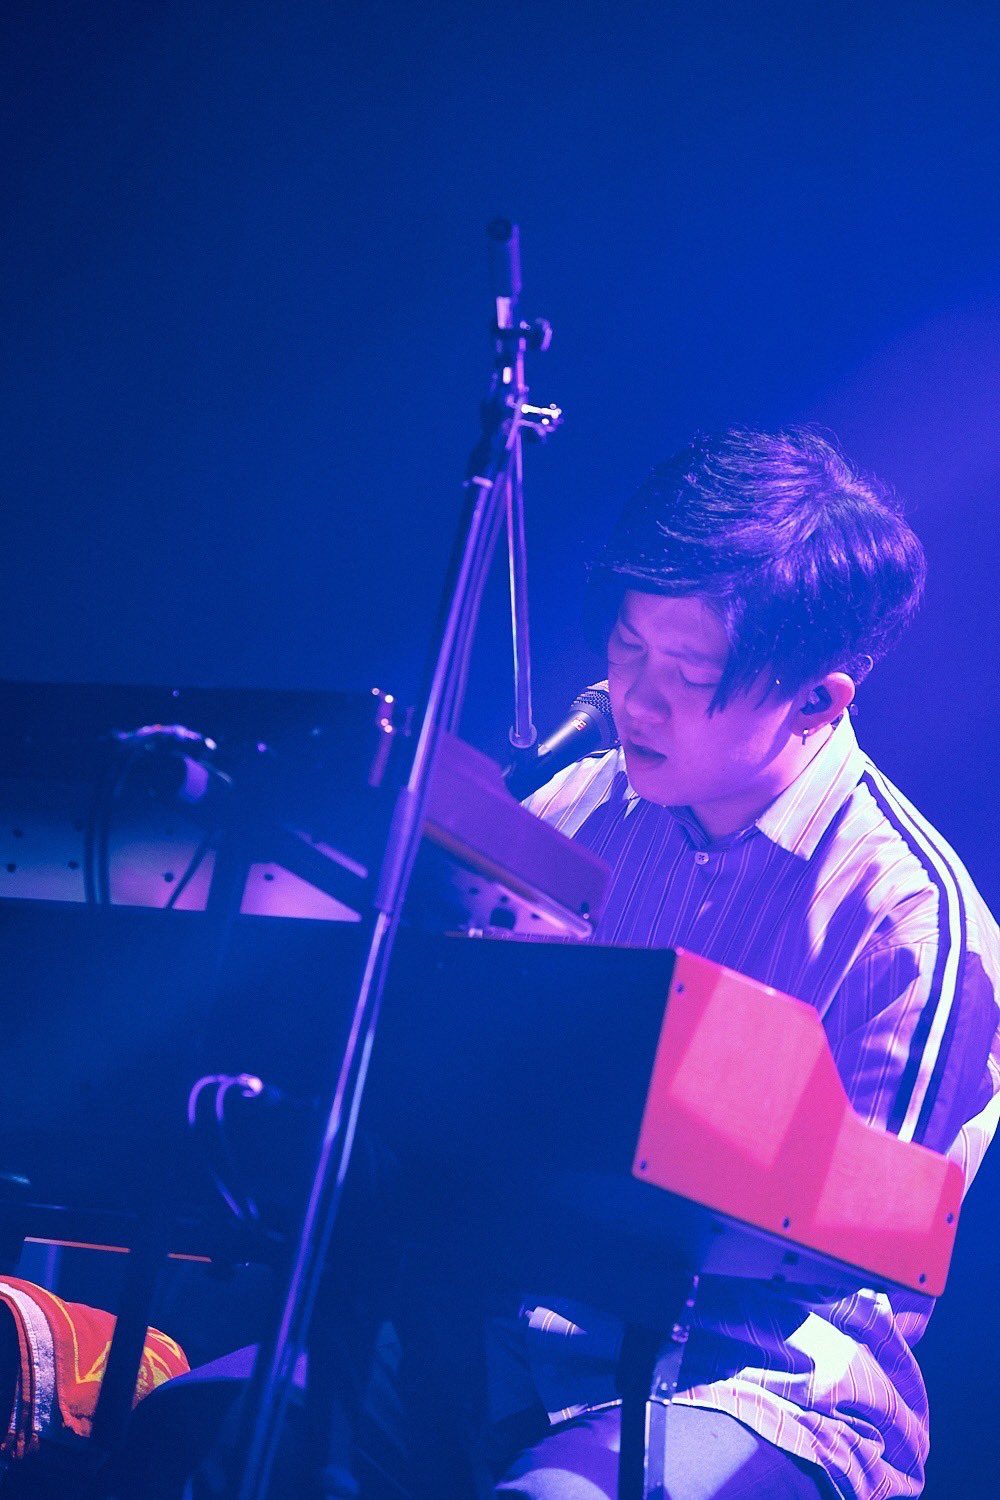 Sumika Sumika Live Tour 22 花鳥風月 第二幕 2月21日 Zepp Sapporo Day1 音楽を届けたい 音楽で届けたい そんなことを強く思いました ありがとうございました Sumika 花鳥風月 花鳥風月第二幕 撮影 後藤壮太郎 T Co